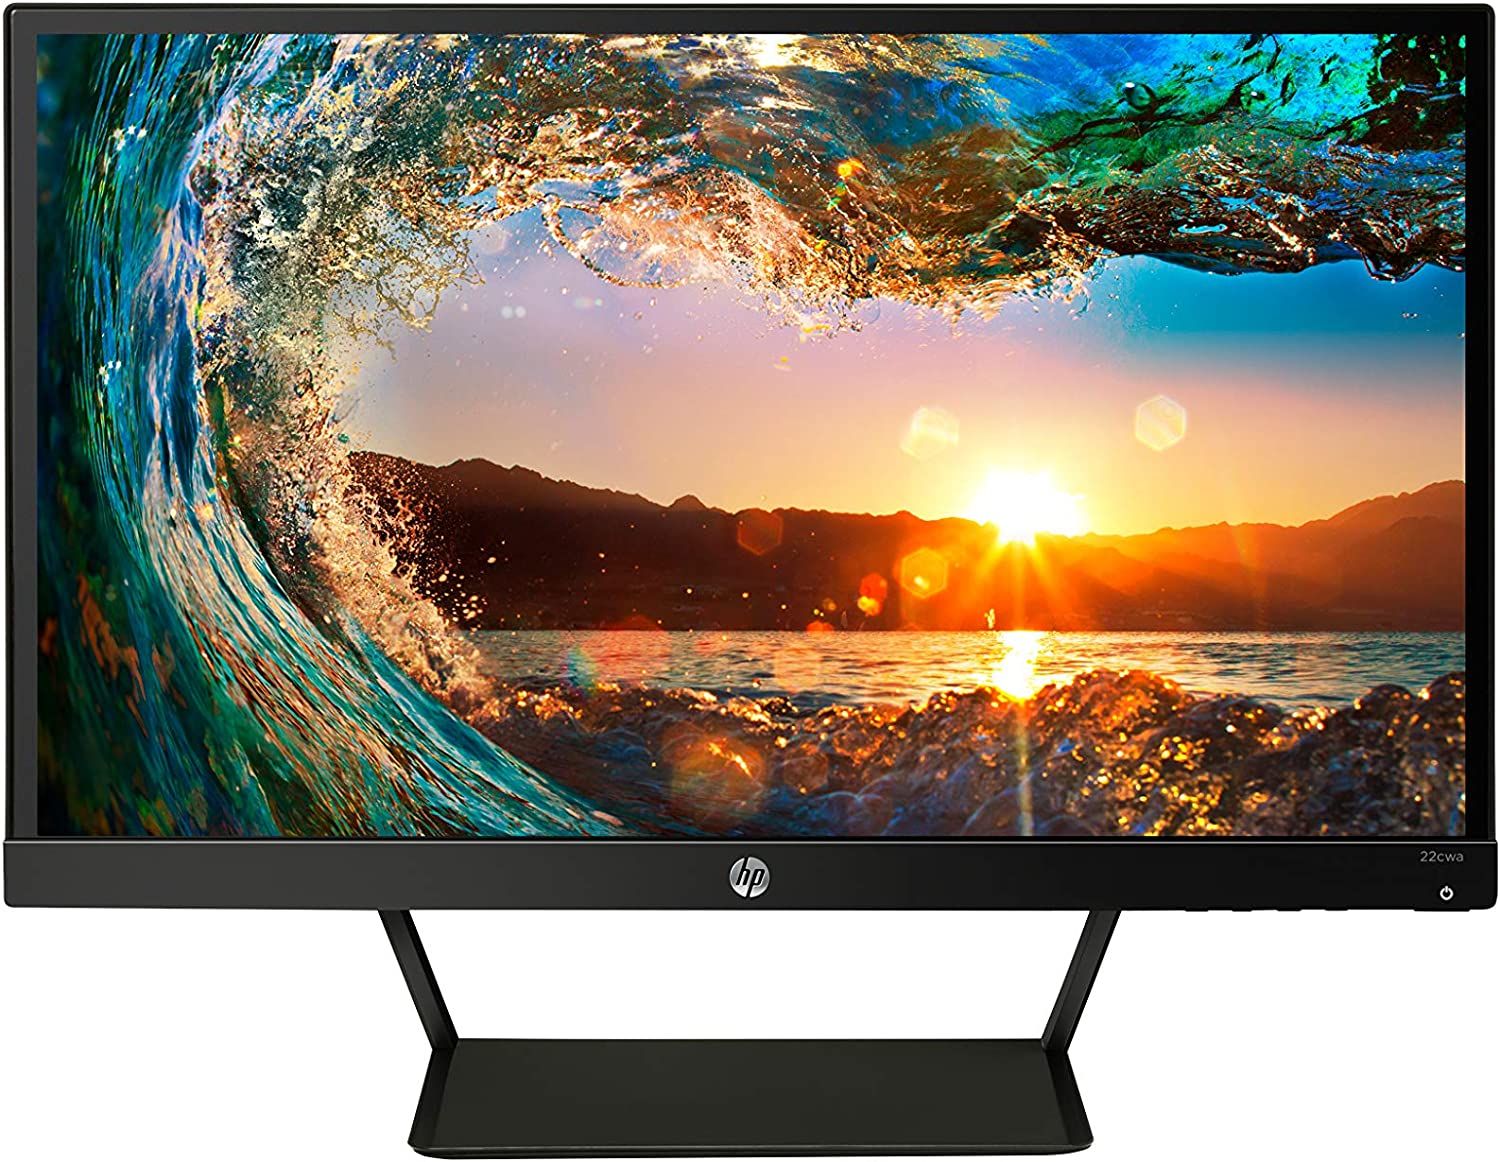 Monitor LED HP Pavilion 22cwa 21.5-inch Full HD 1080p IPS